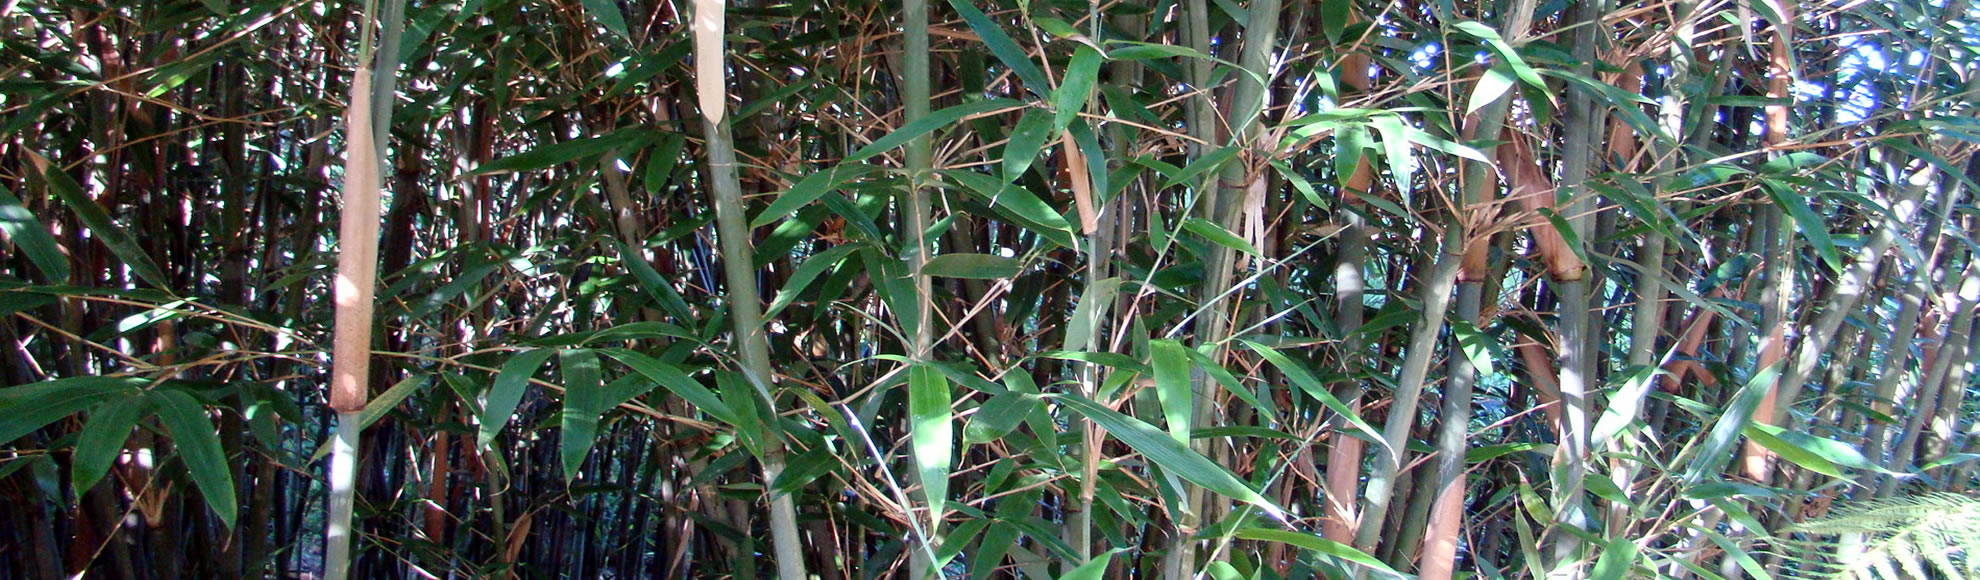 Bamboo nursery